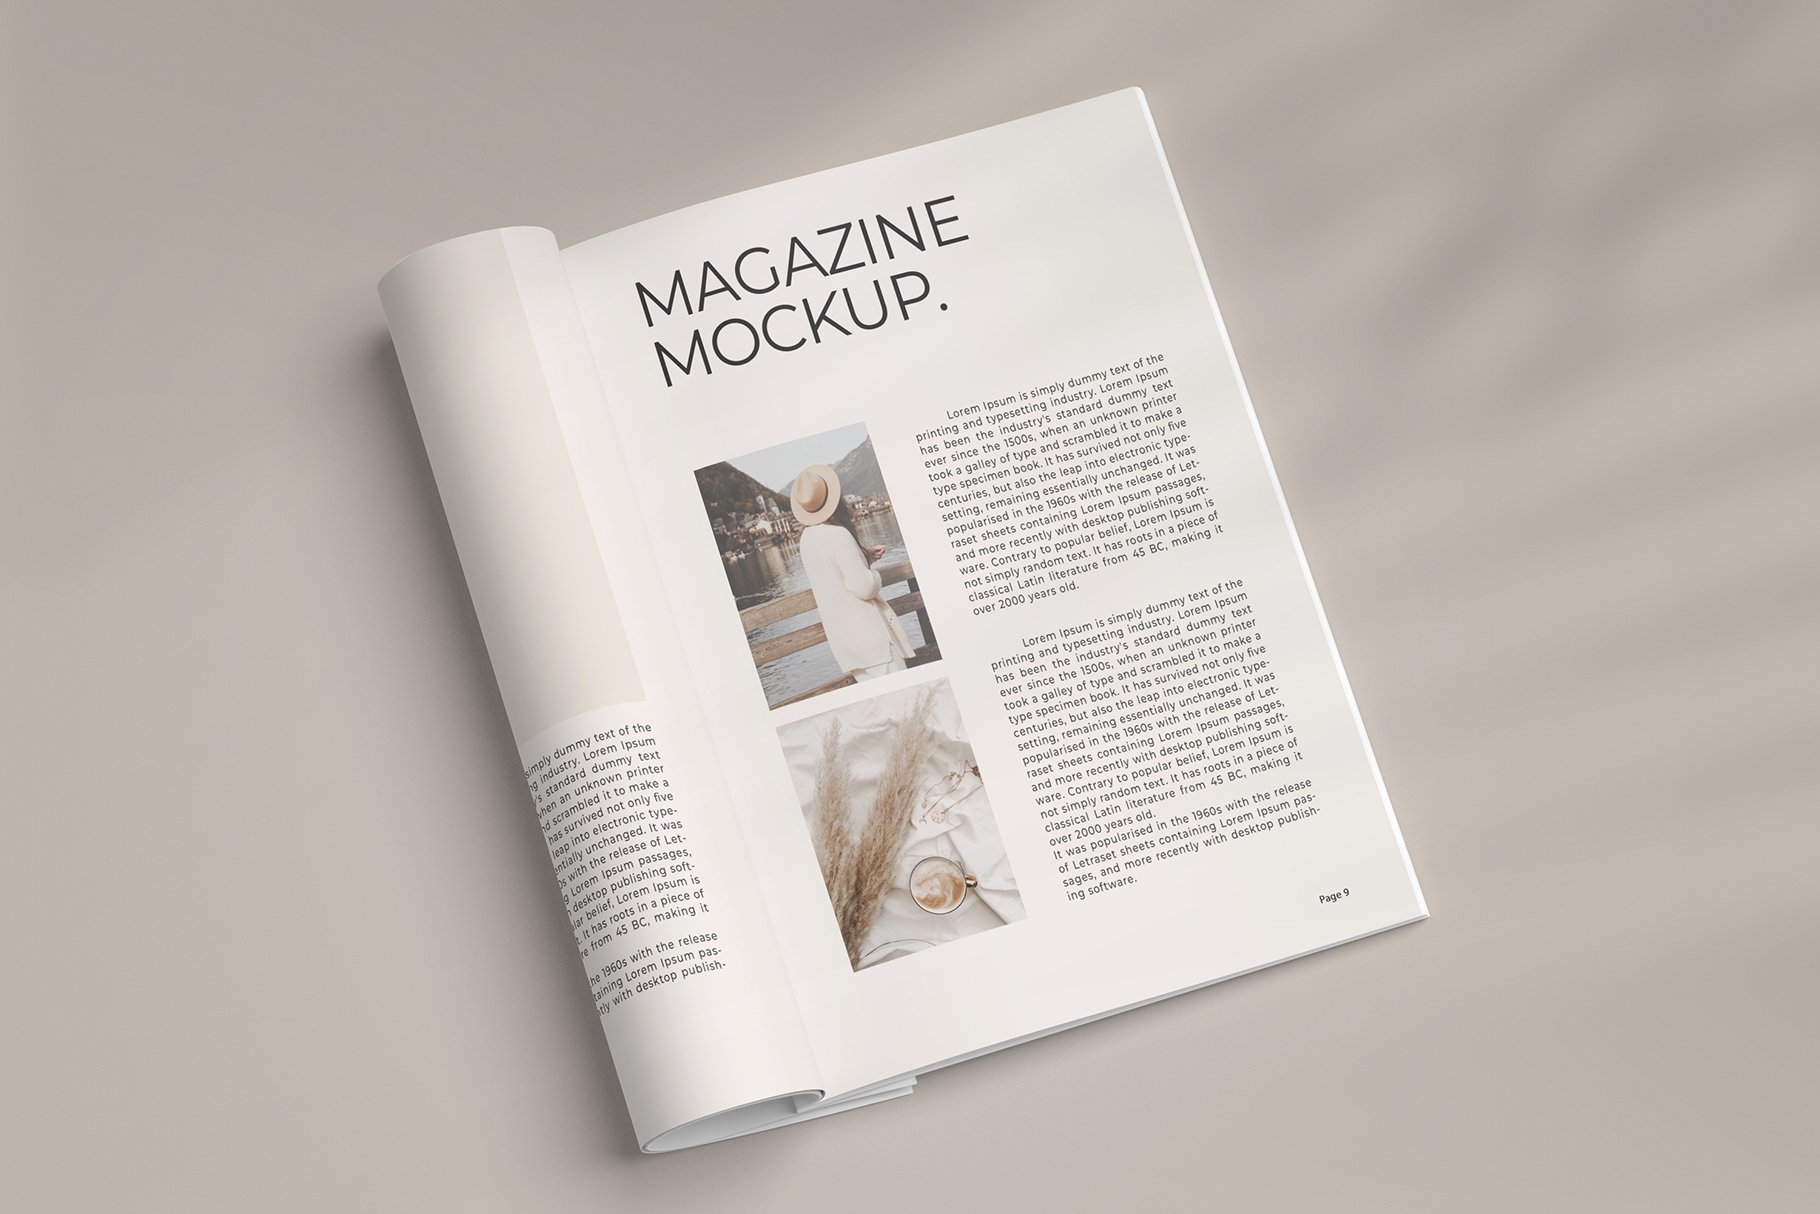 Magazine Mockup preview image.